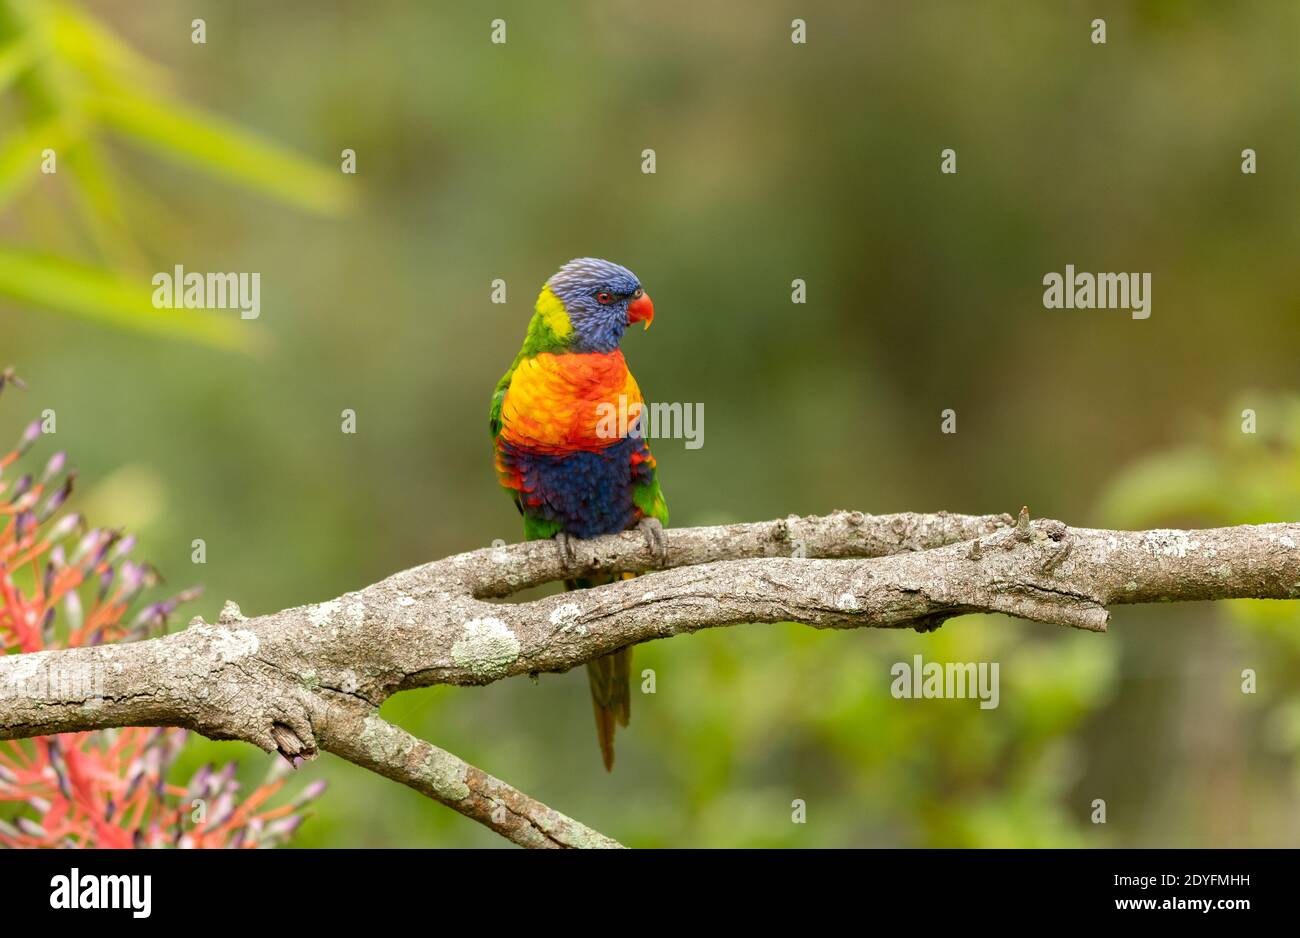 Rainbow Lorikeet (Trichoglossus haematodus) on a branch, colorful birds found across Australia. Stock Photo